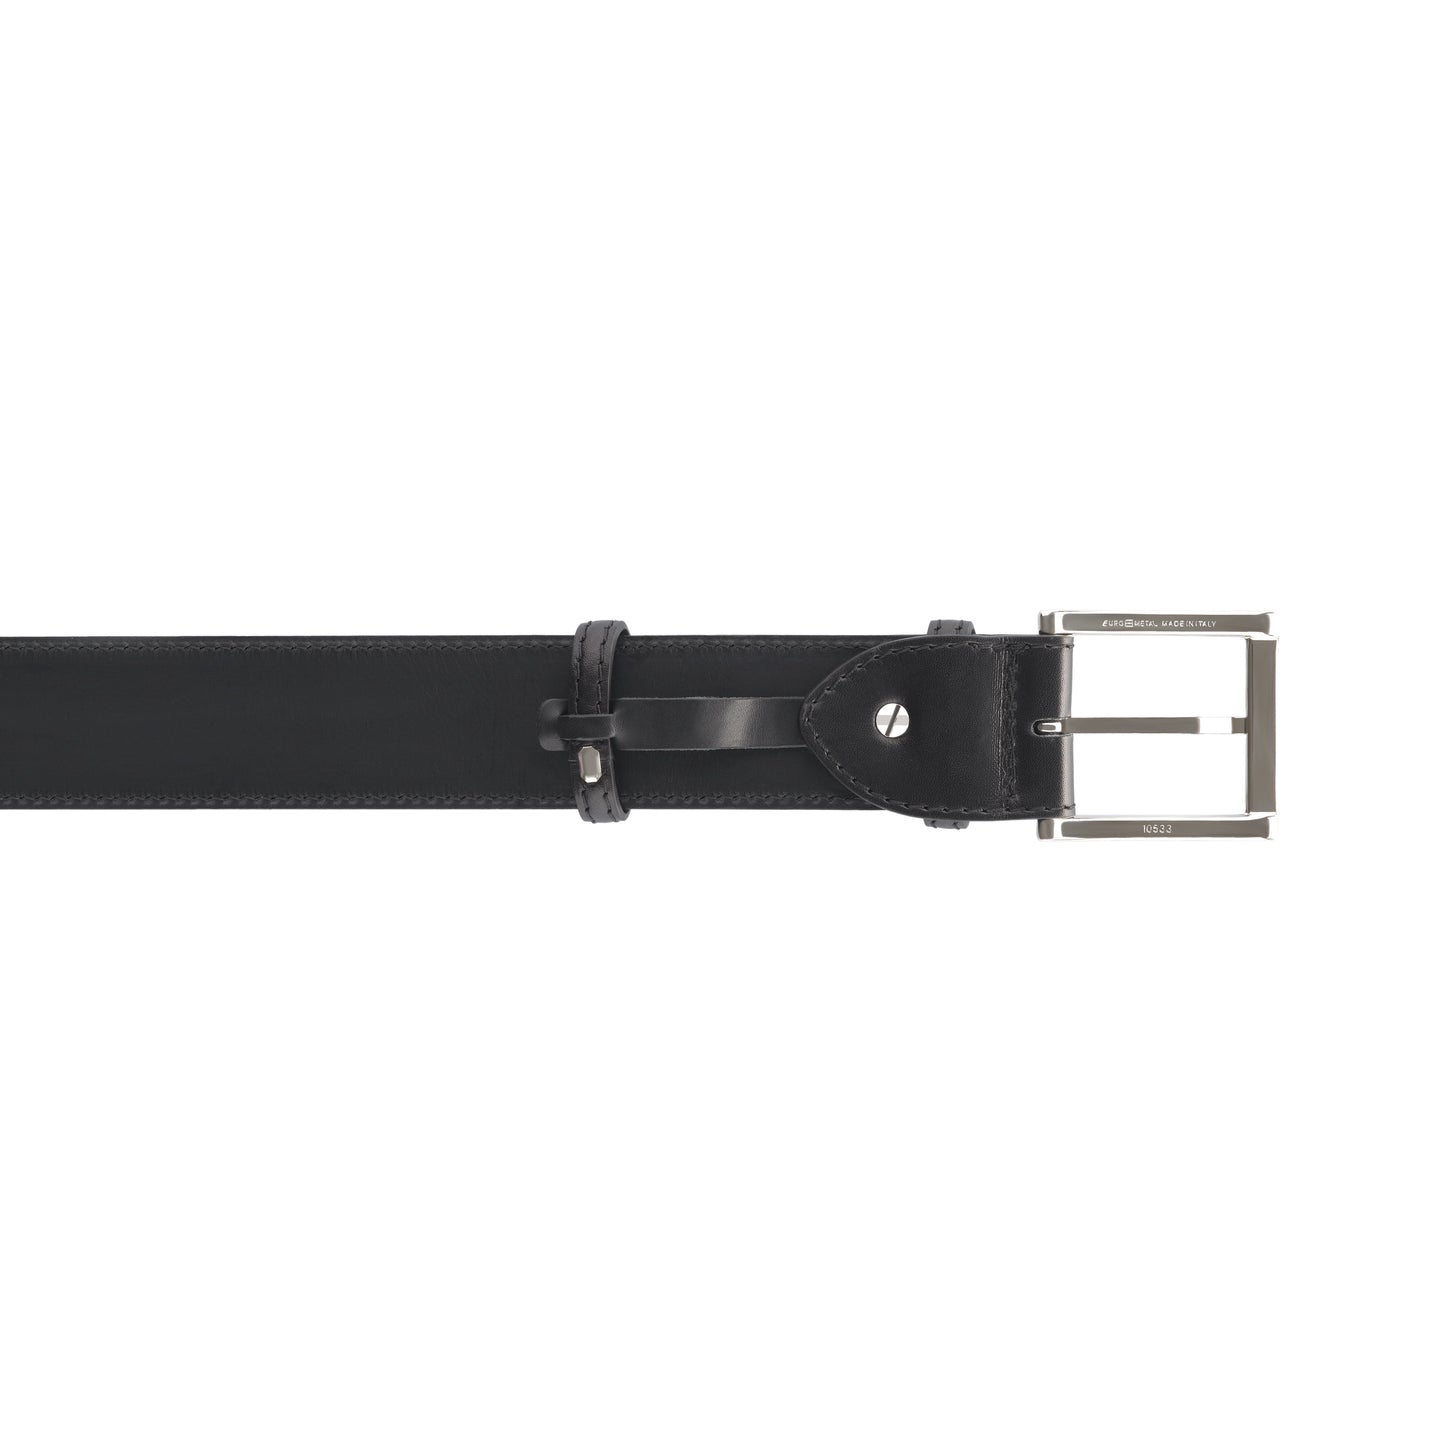 Calfskin Leather Belt in Black